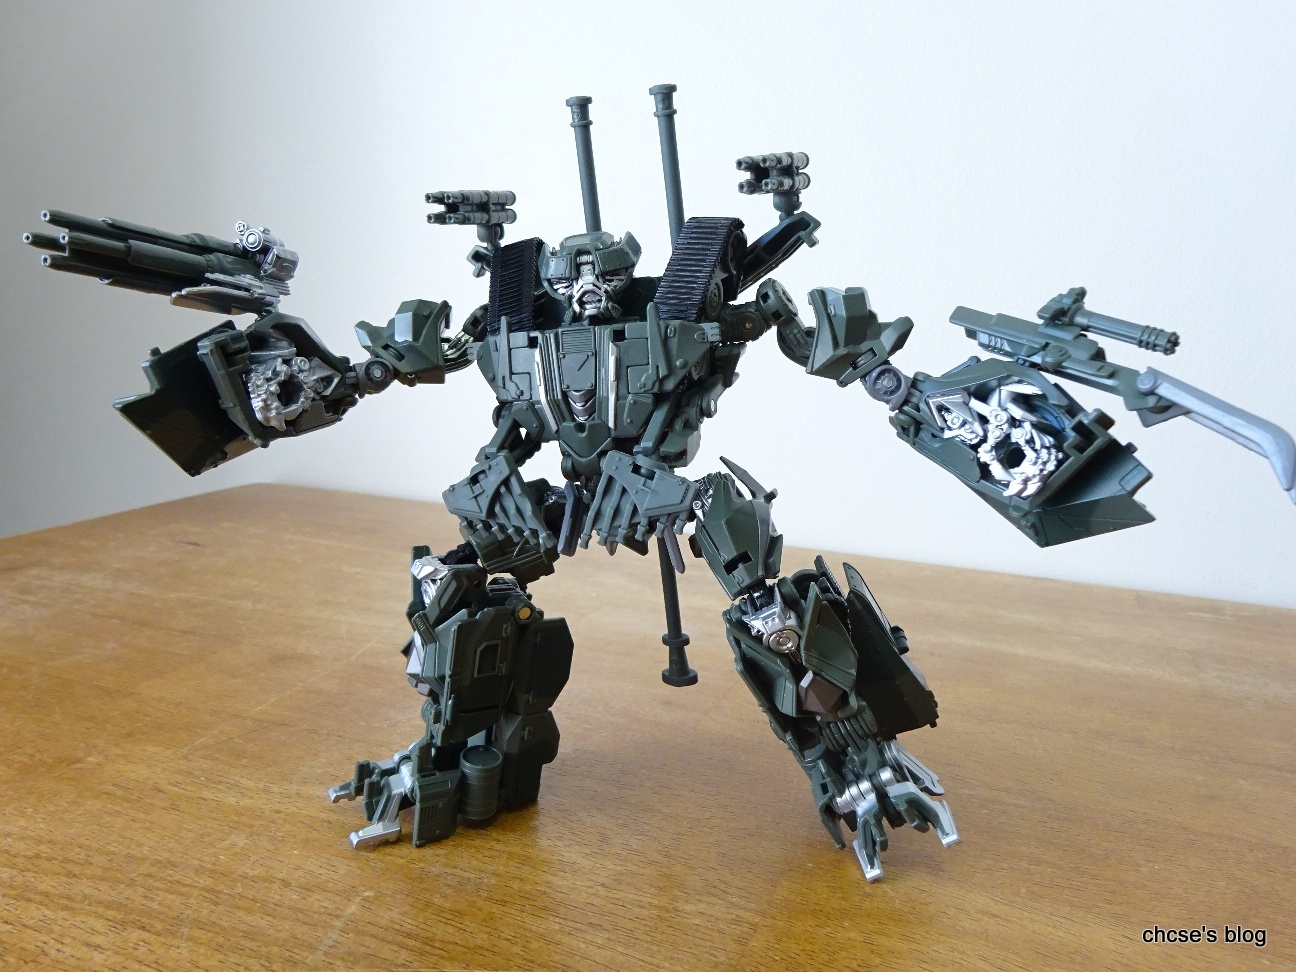 ChCse's blog: Toy Review: Transformers Generations Studio Series Brawl 